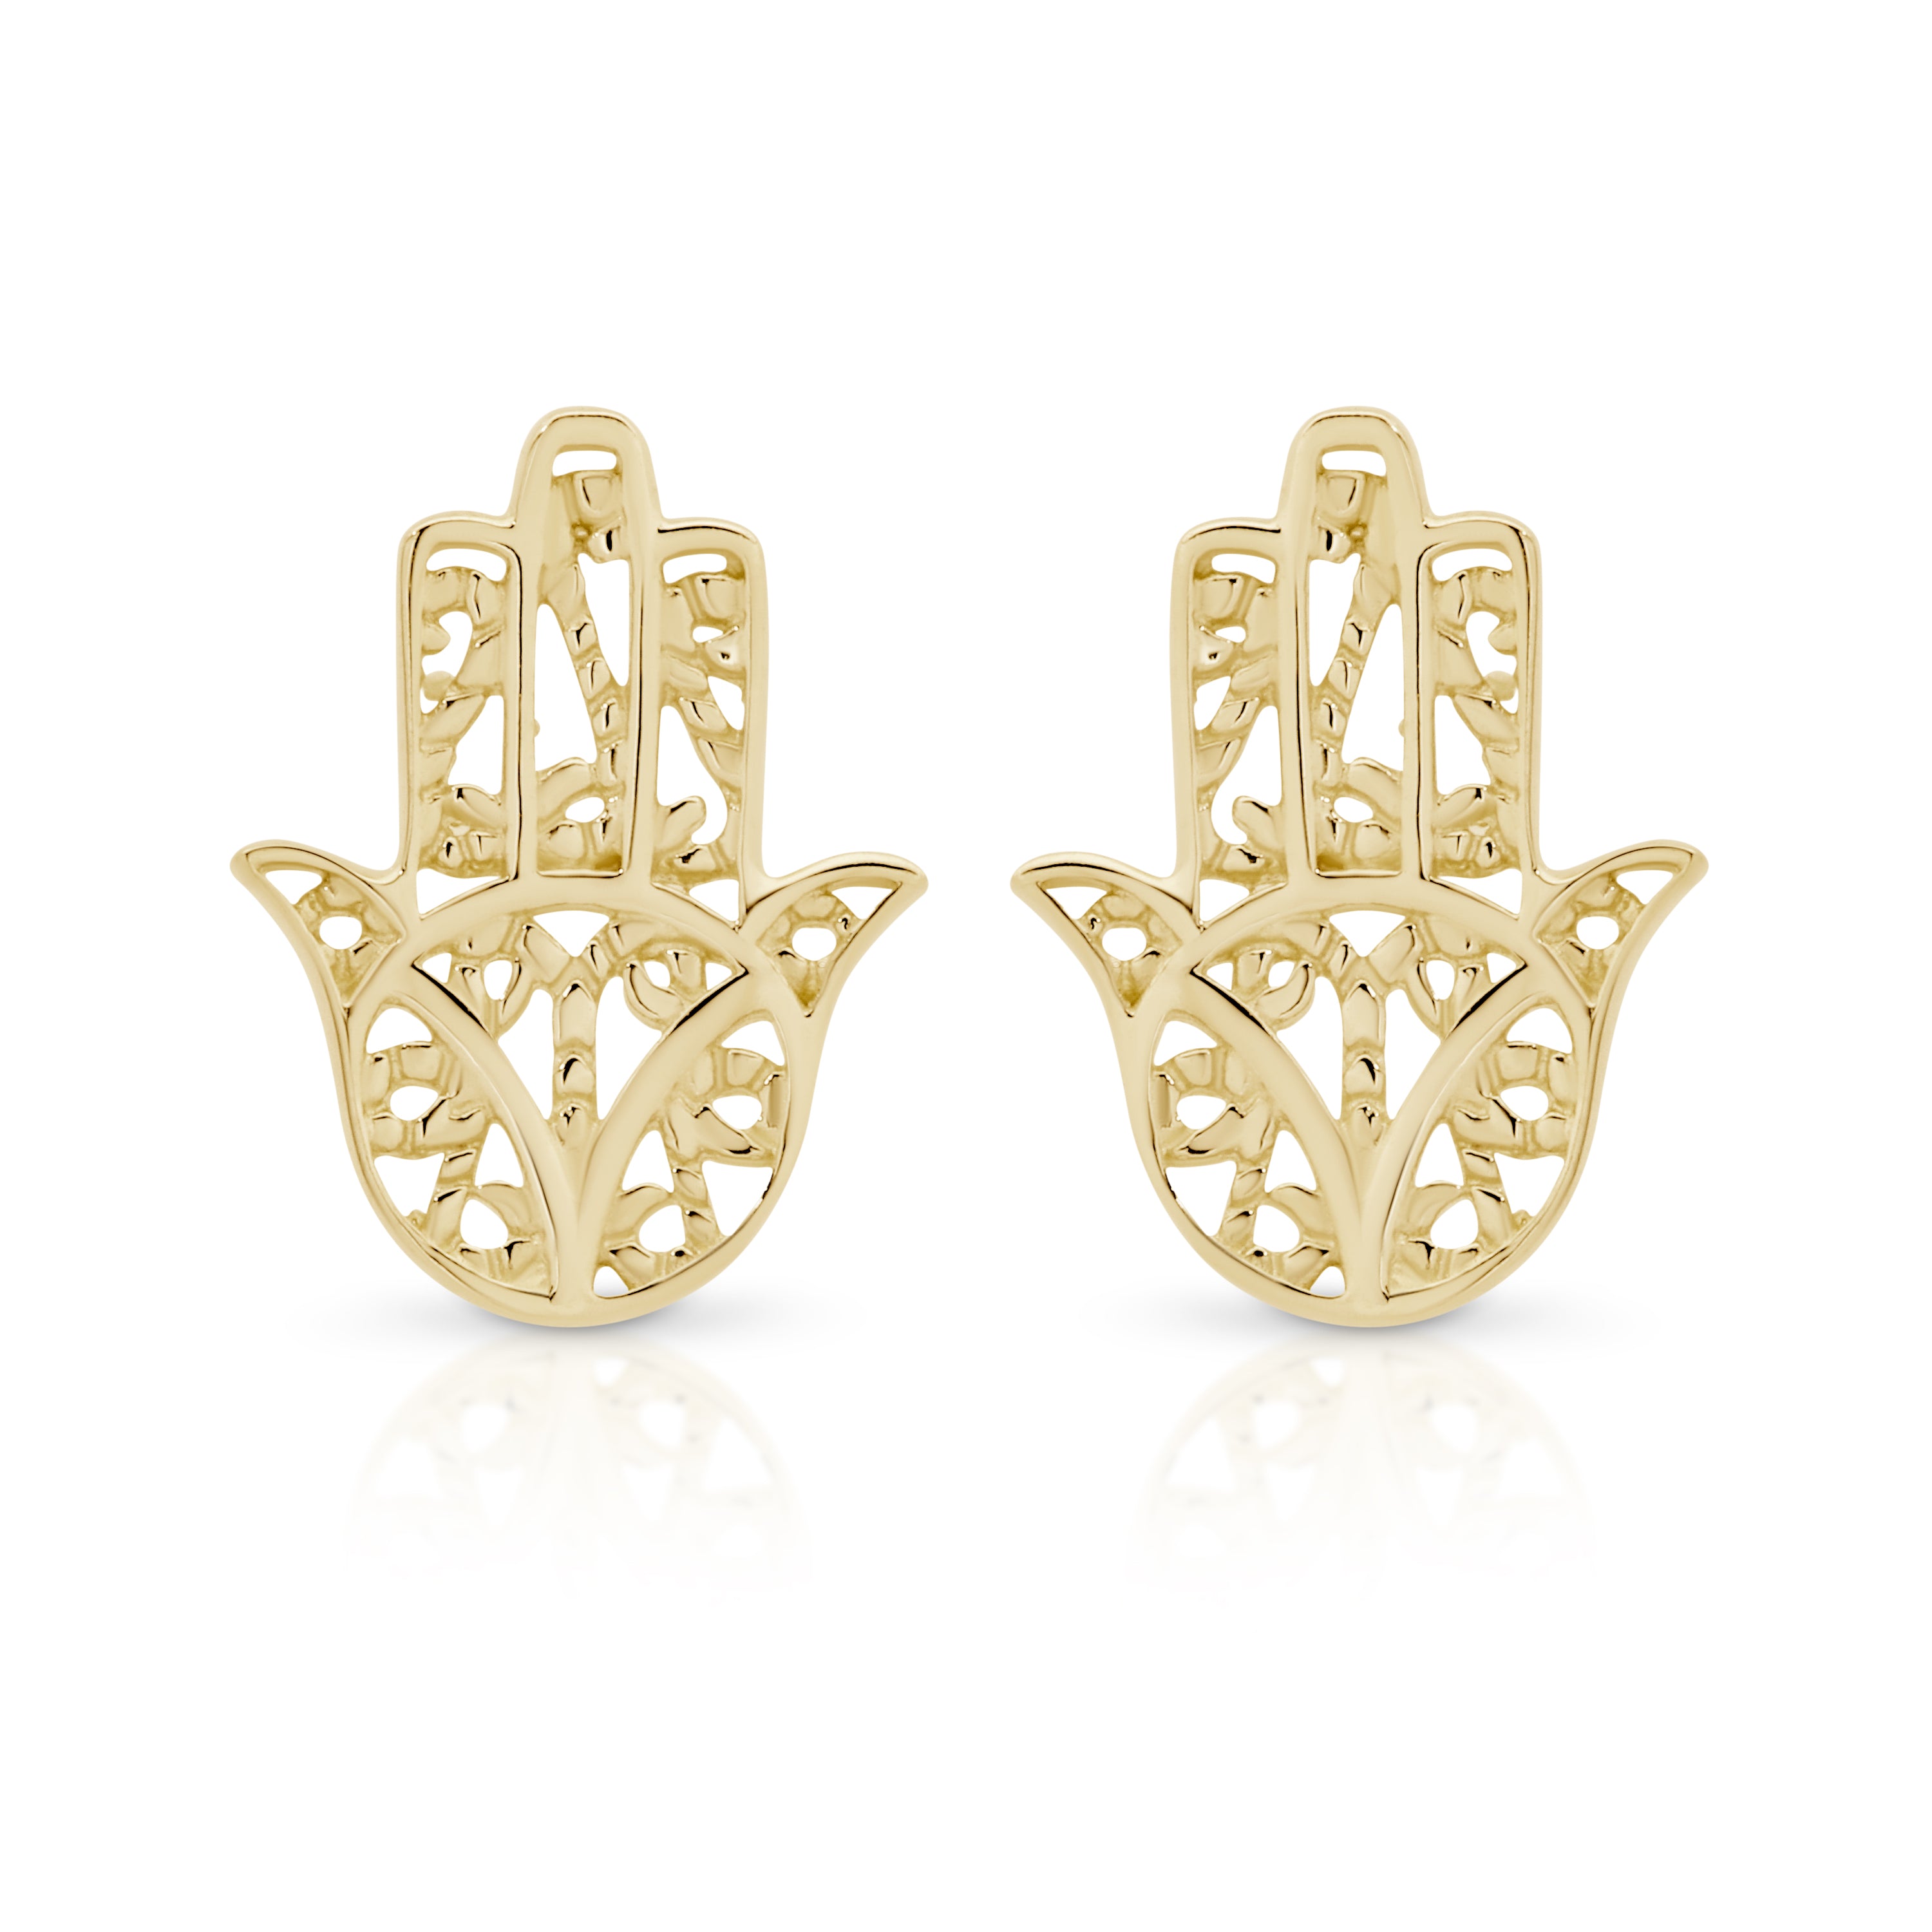 9ct gold hamsa earrings